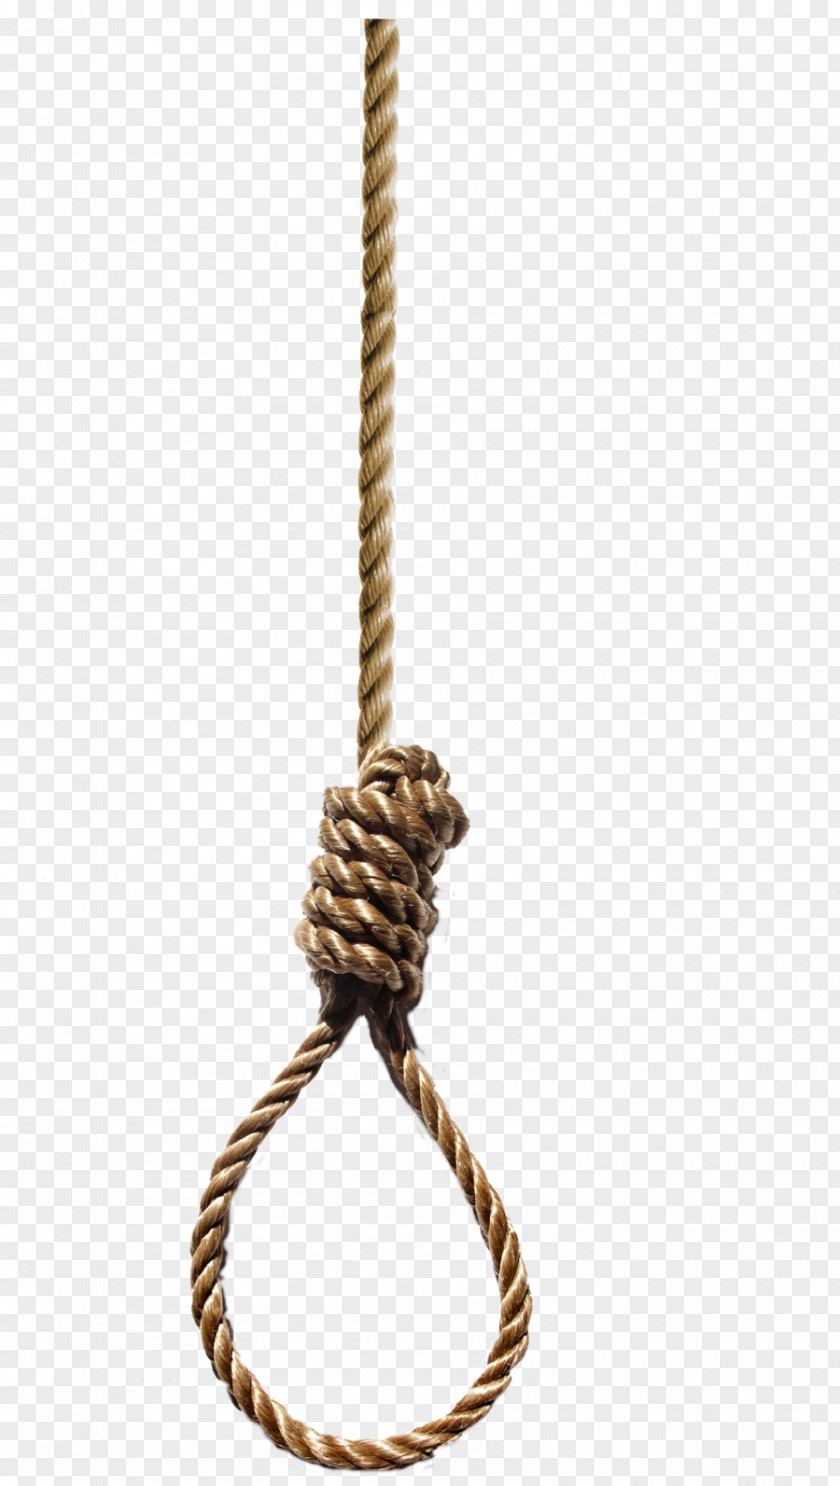 Rope Noose Hangman's Knot PNG